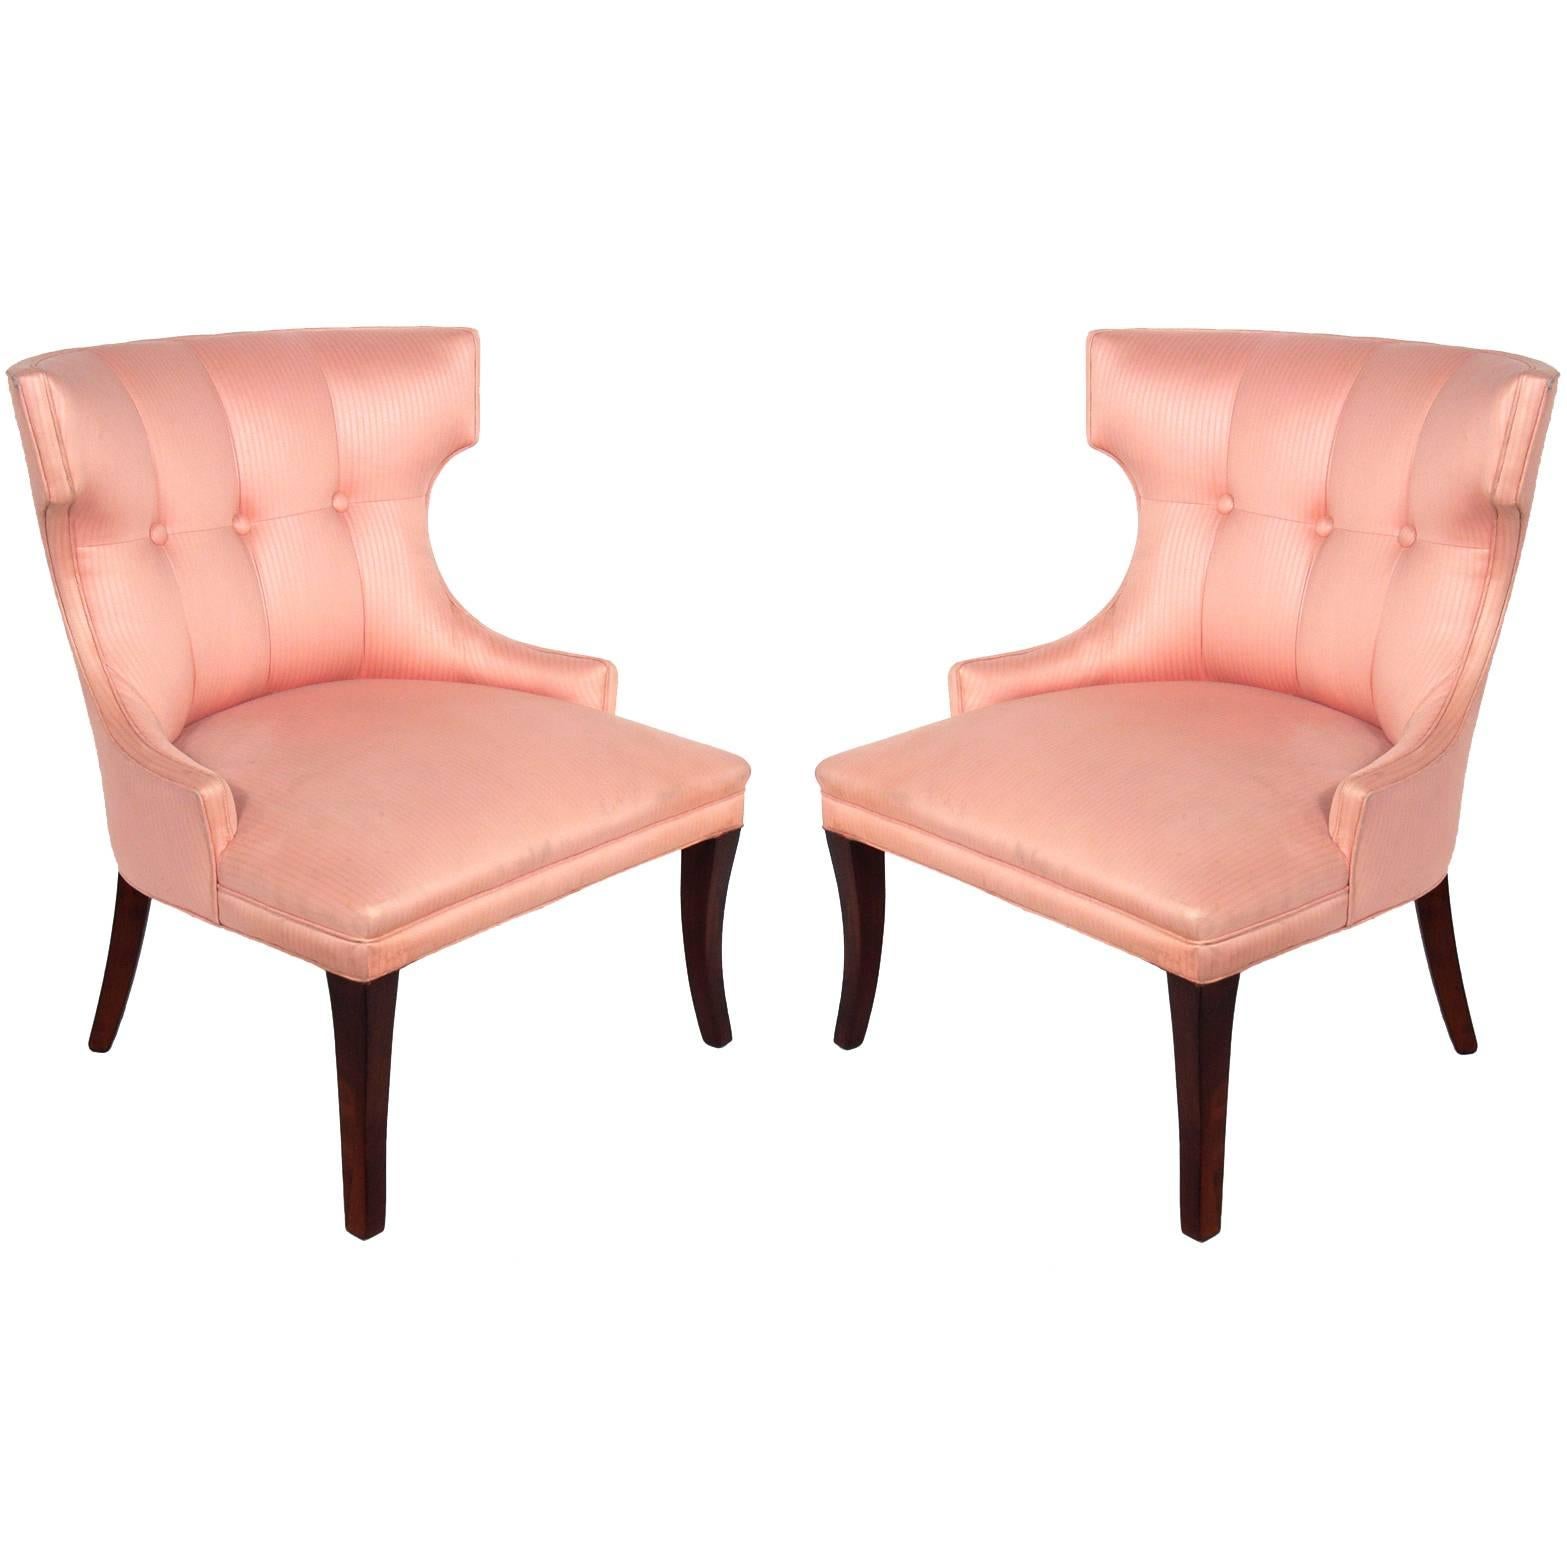 Pair of Glamorous Hollywood Regency Chairs